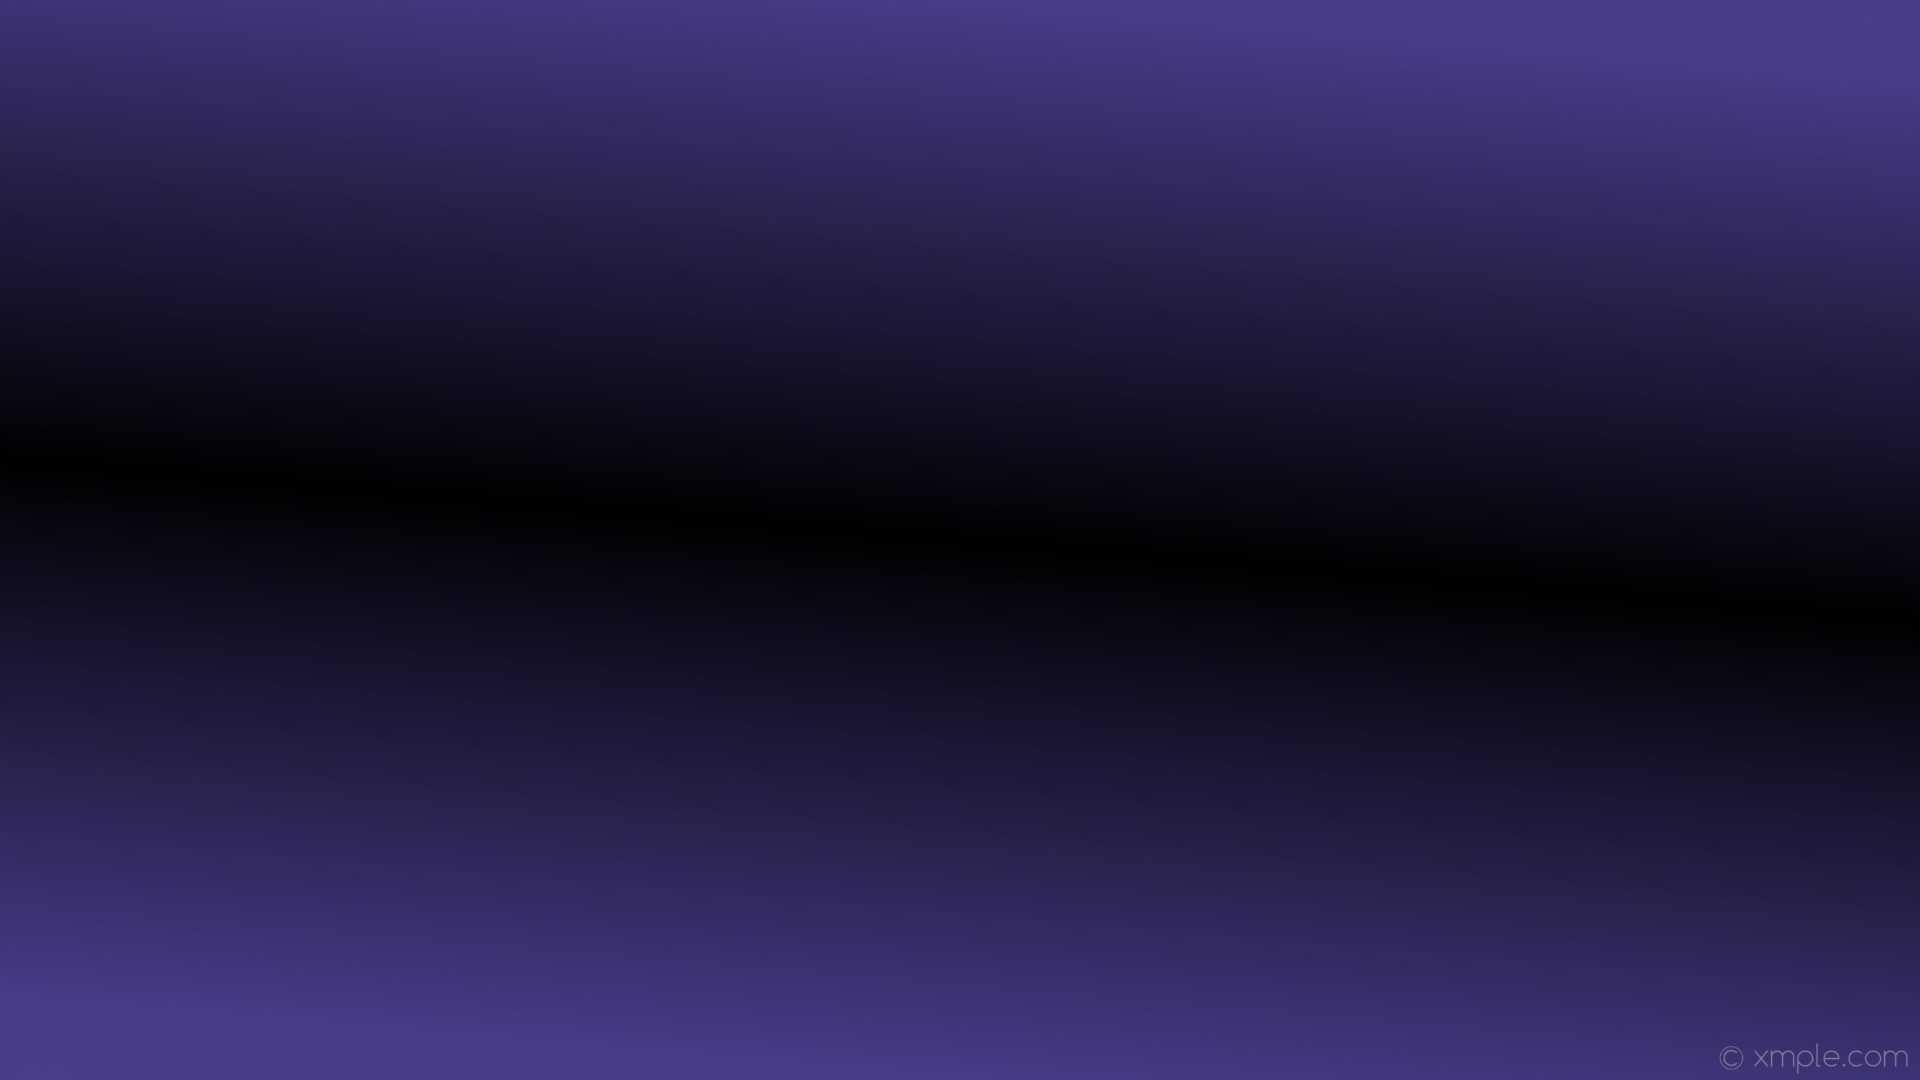 1920x1080 wallpaper black purple highlight linear gradient dark slate blue #483d8b  #000000 255Â° 50